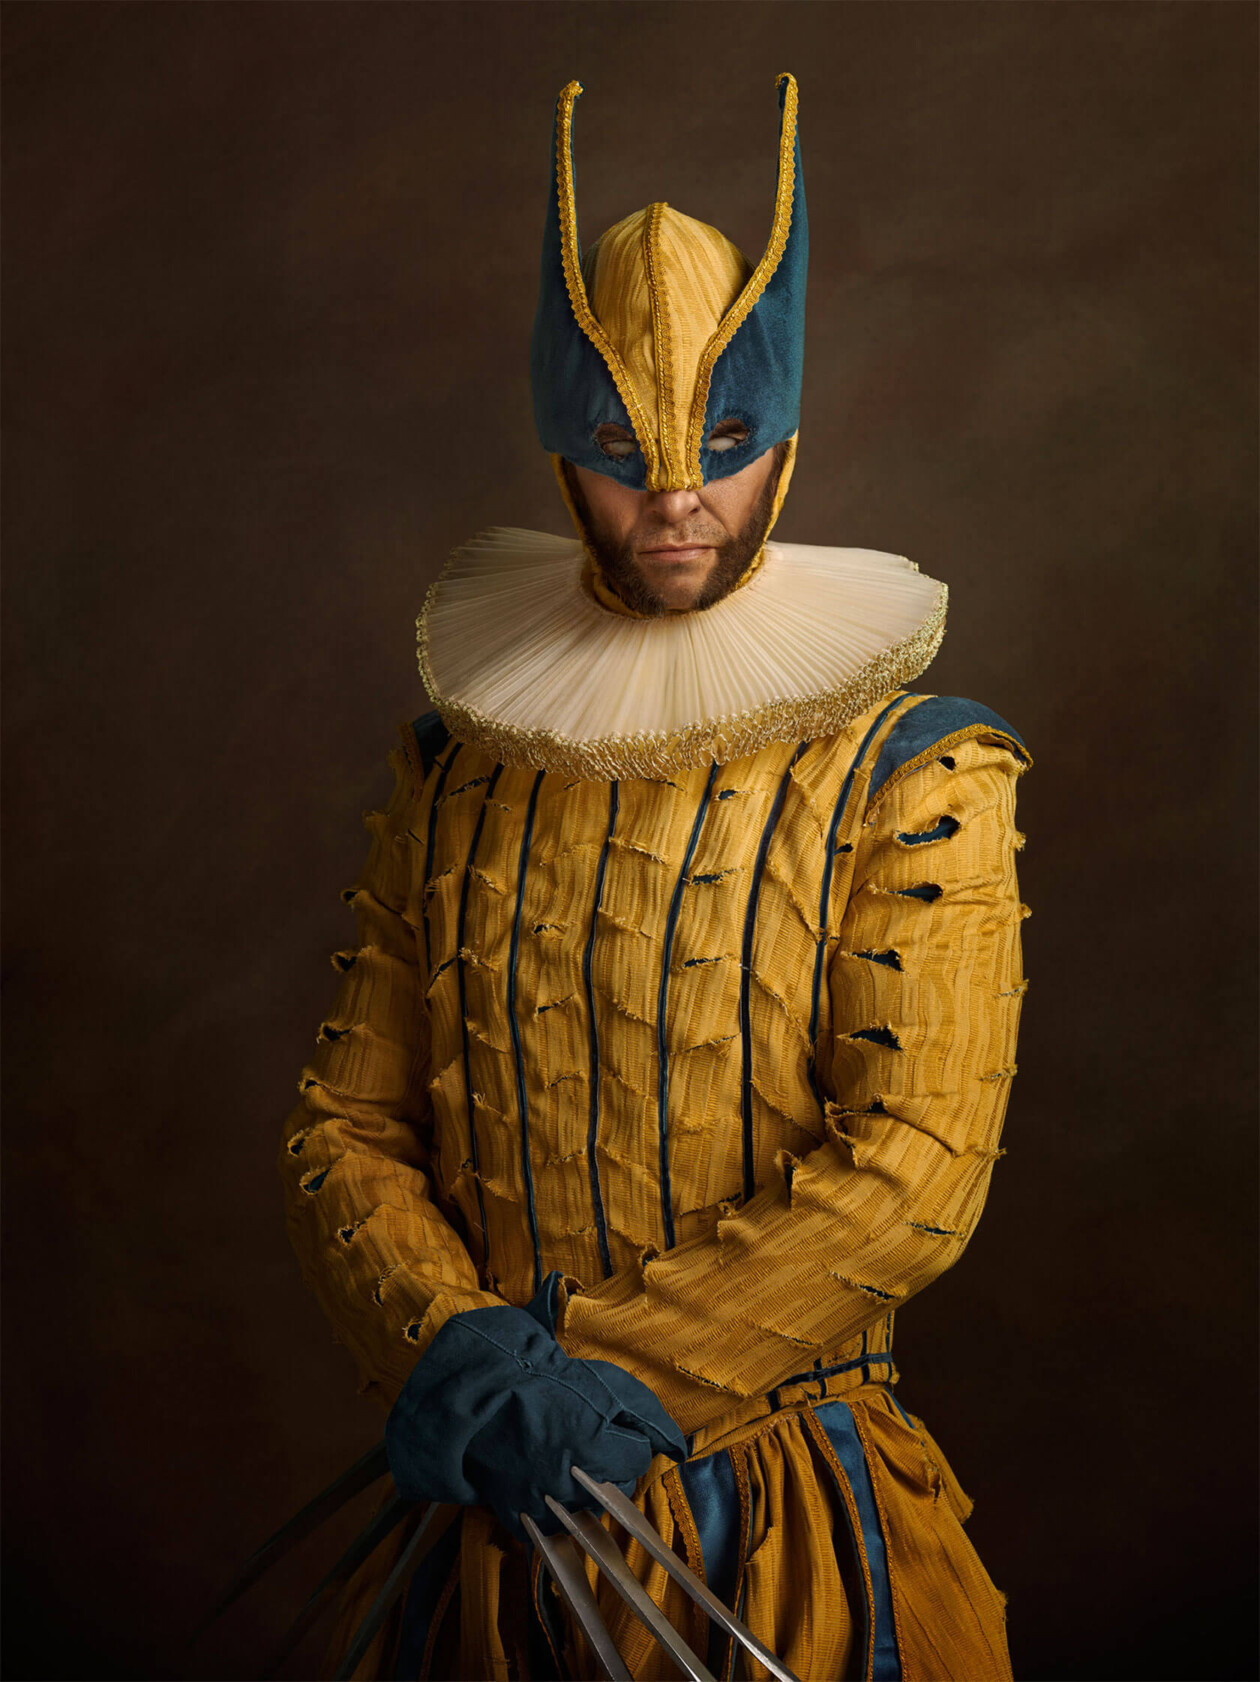 Flemish Superheroes, A Creative Portrait Series By Sacha Goldberger (15)